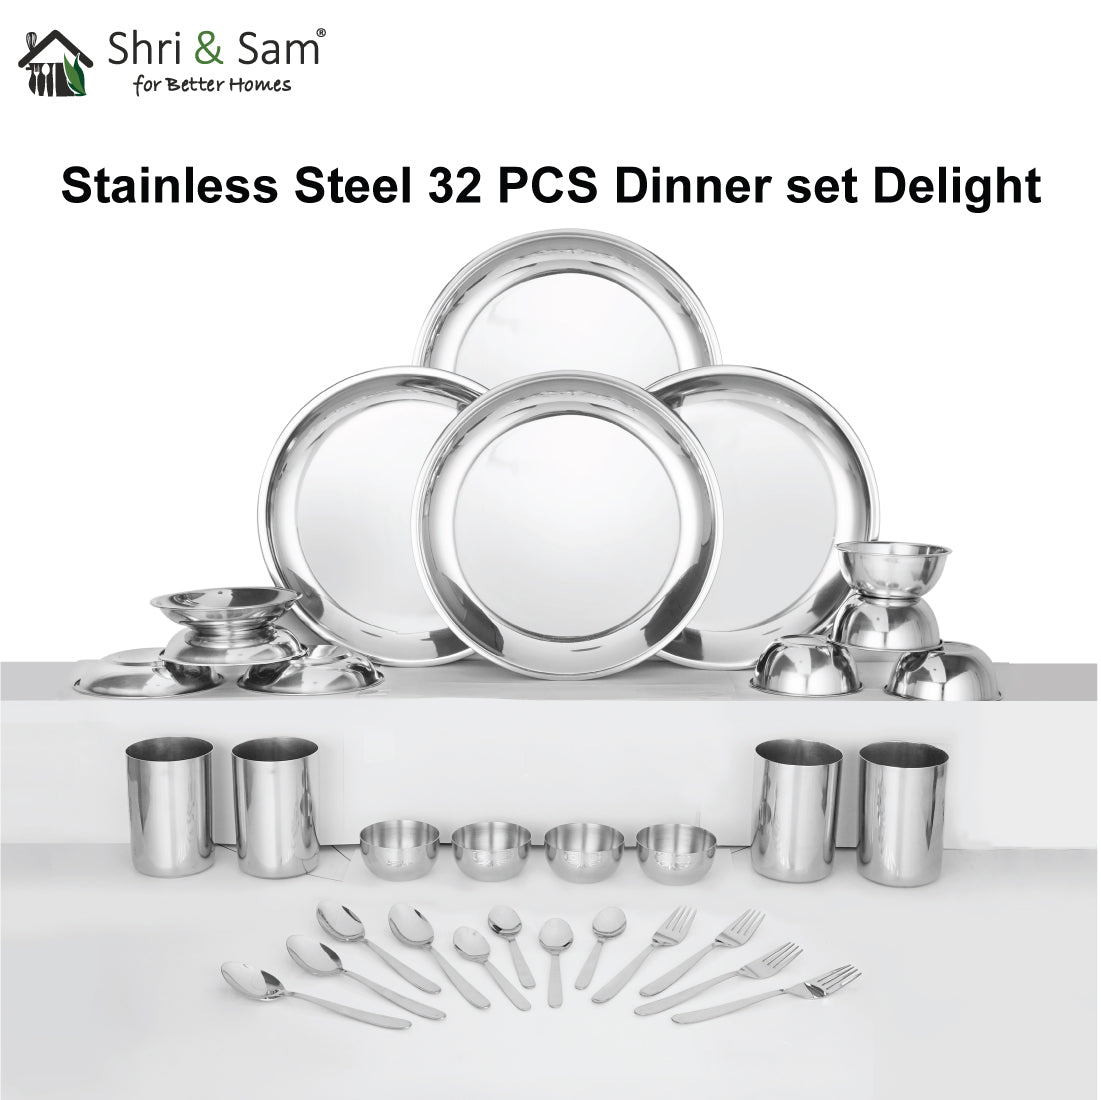 Stainless Steel 32 PCS Dinner set (4 People) Delight